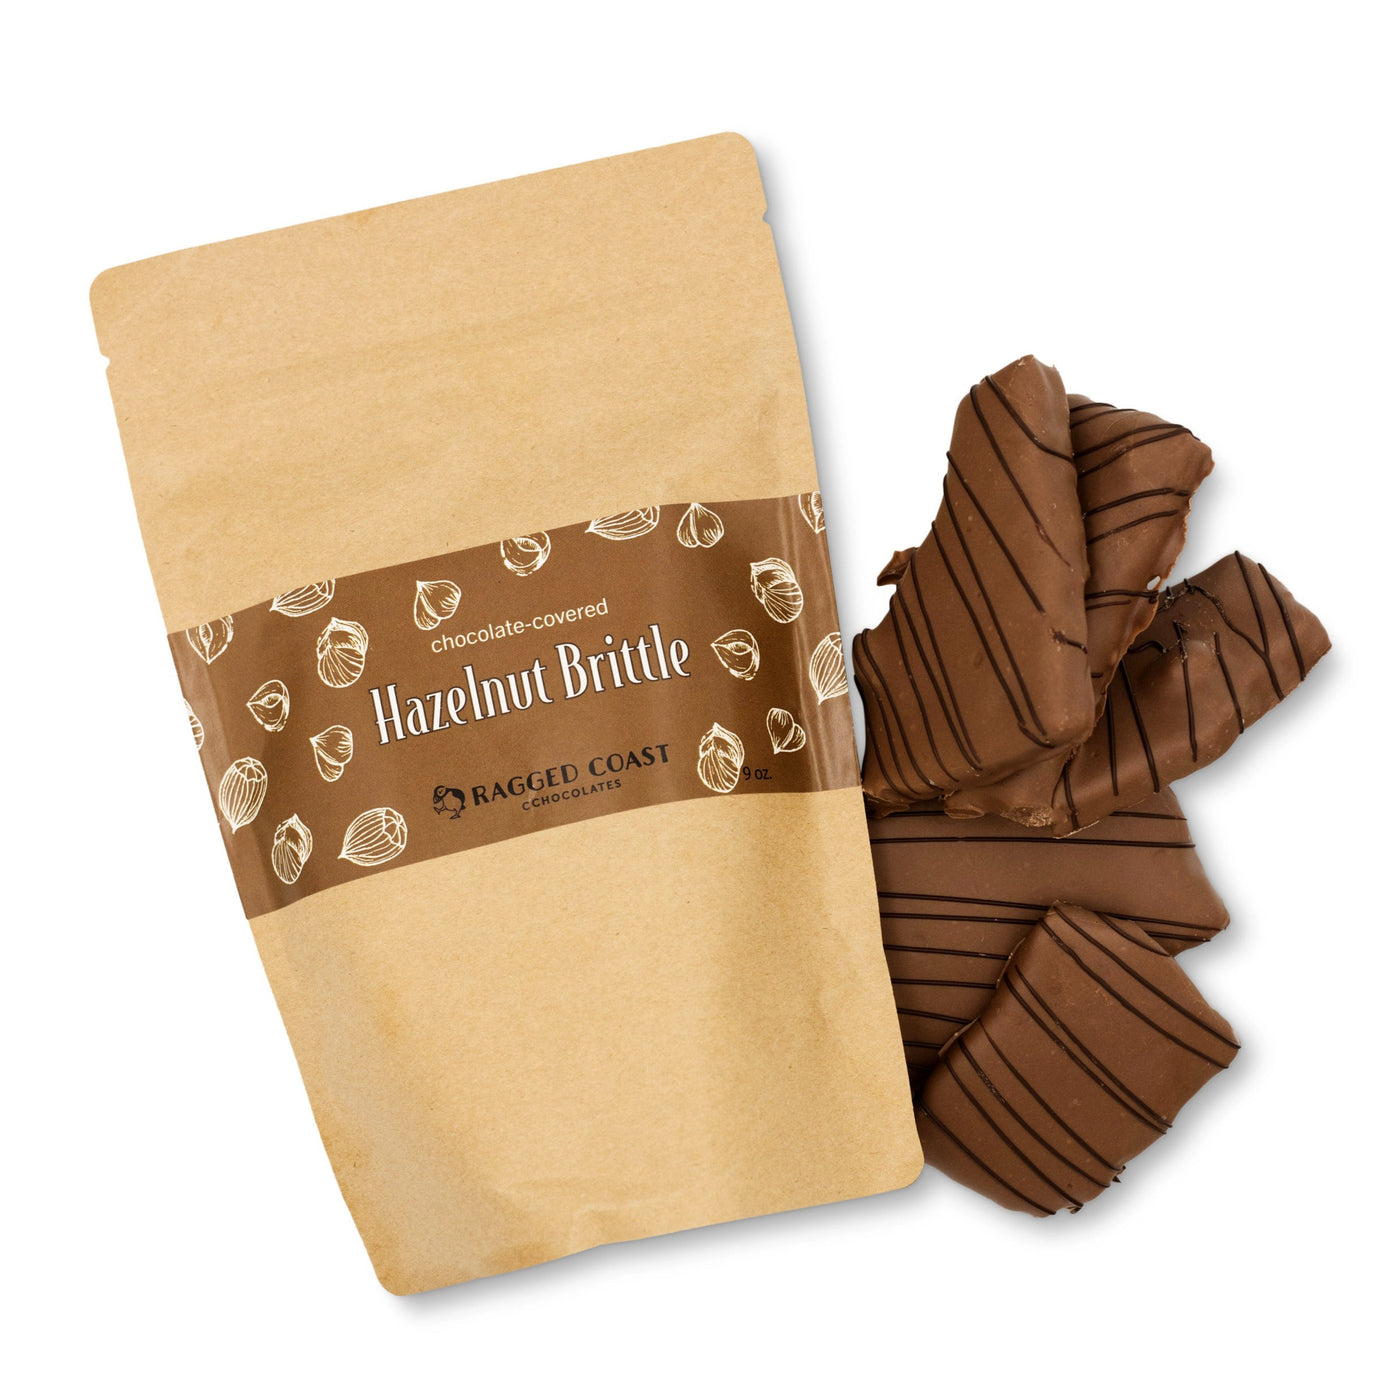 Milk Chocolate-Covered Hazelnut Frangelico Brittle - 9-ounce bag